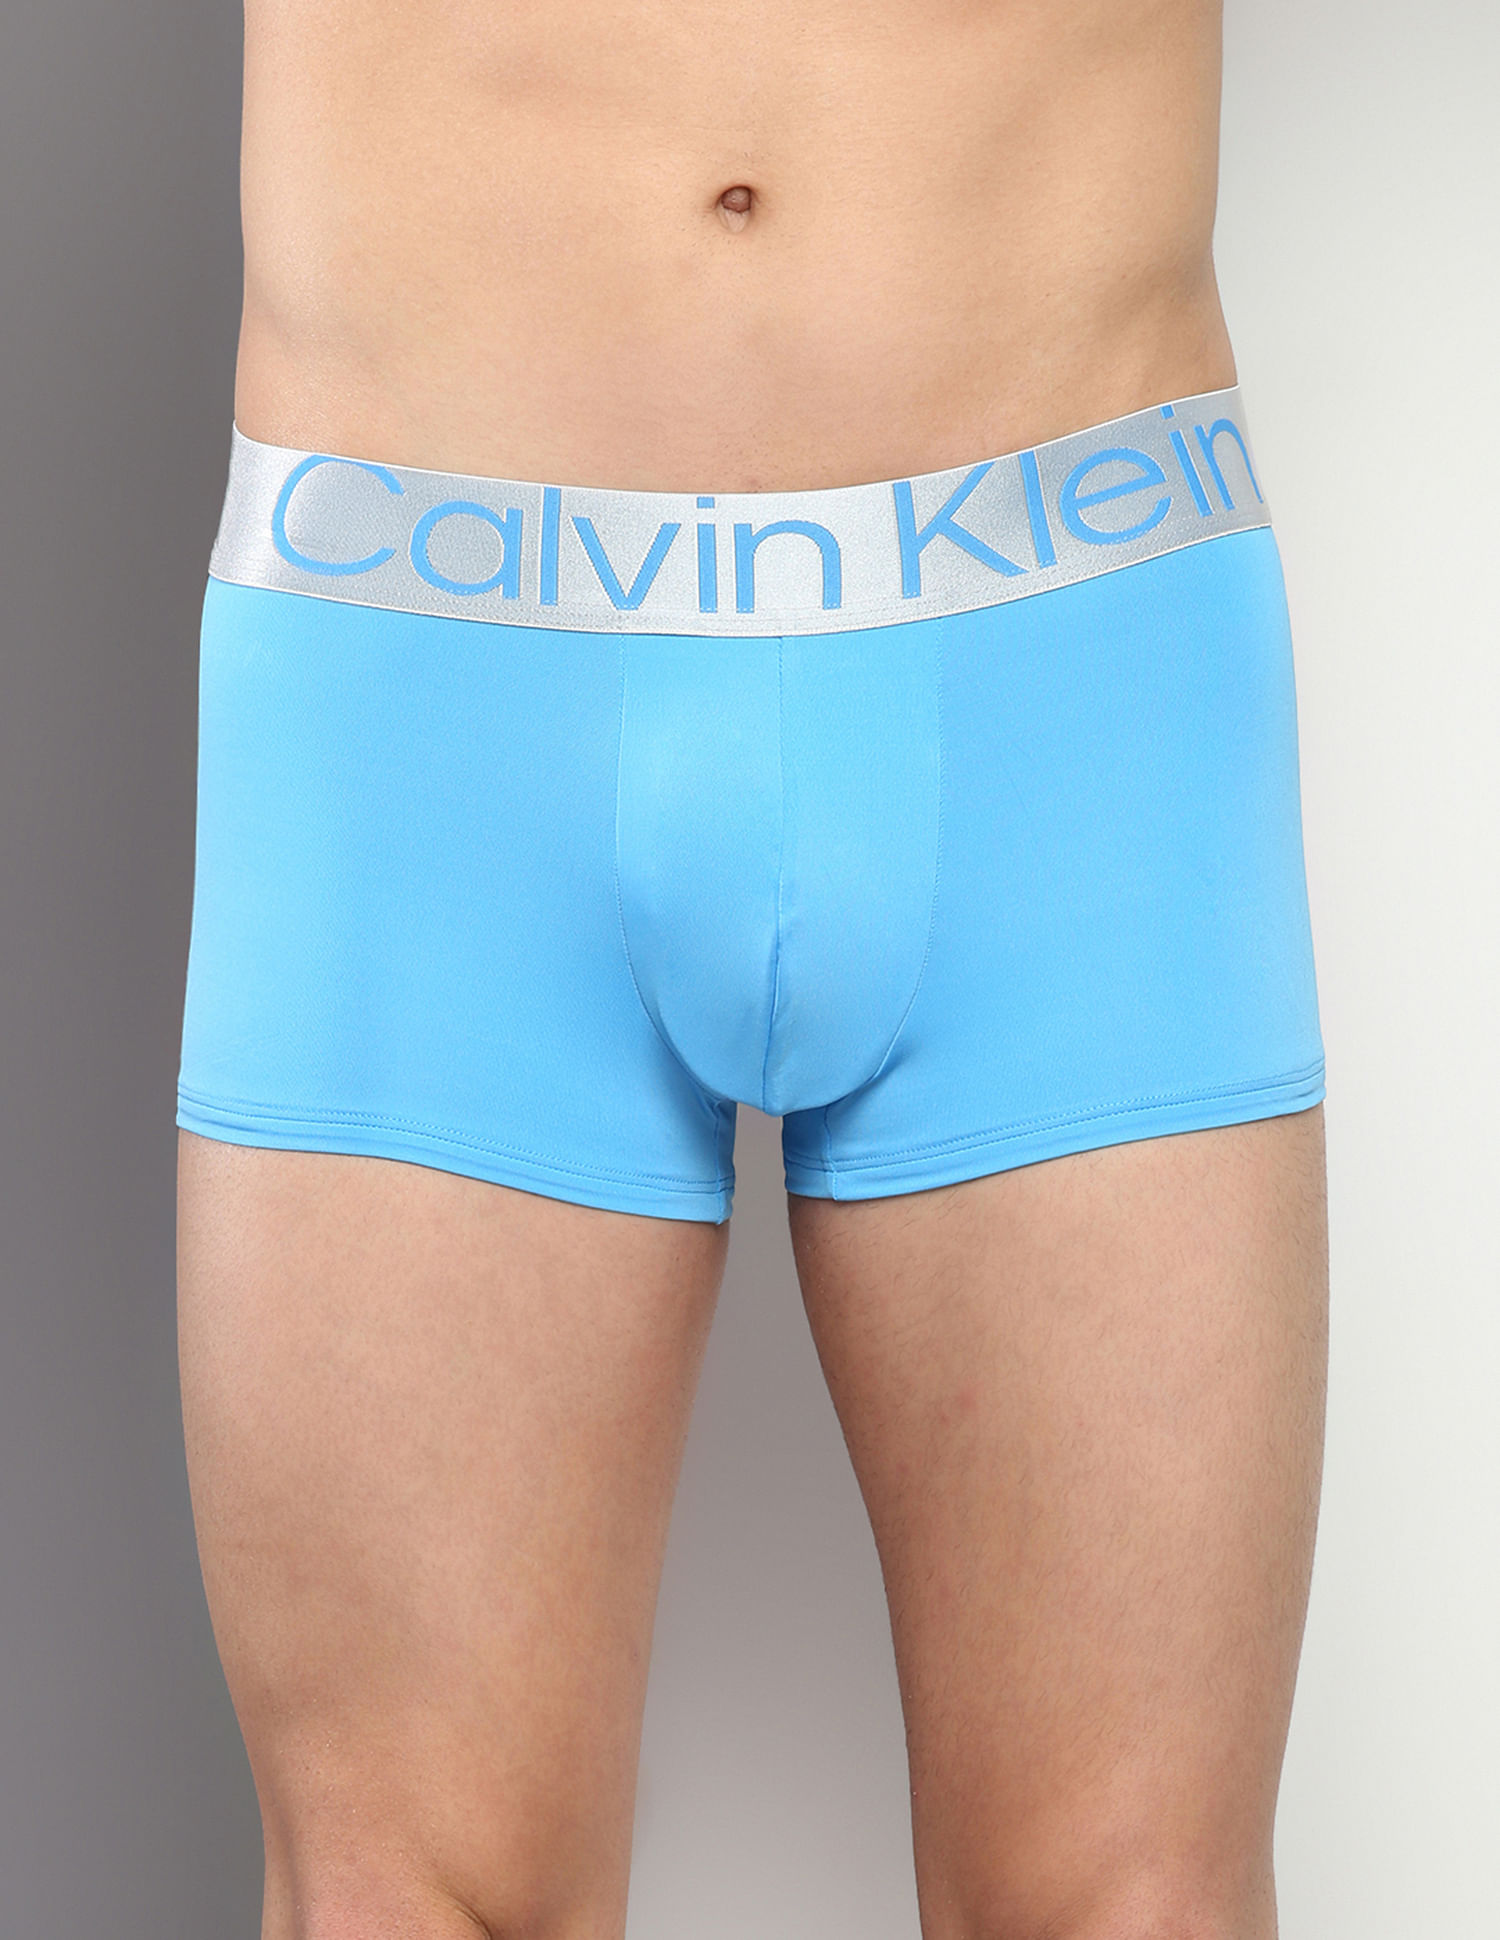 Cueca Boxer Low Rise Trunk Calvin Klein Cotton C12.10